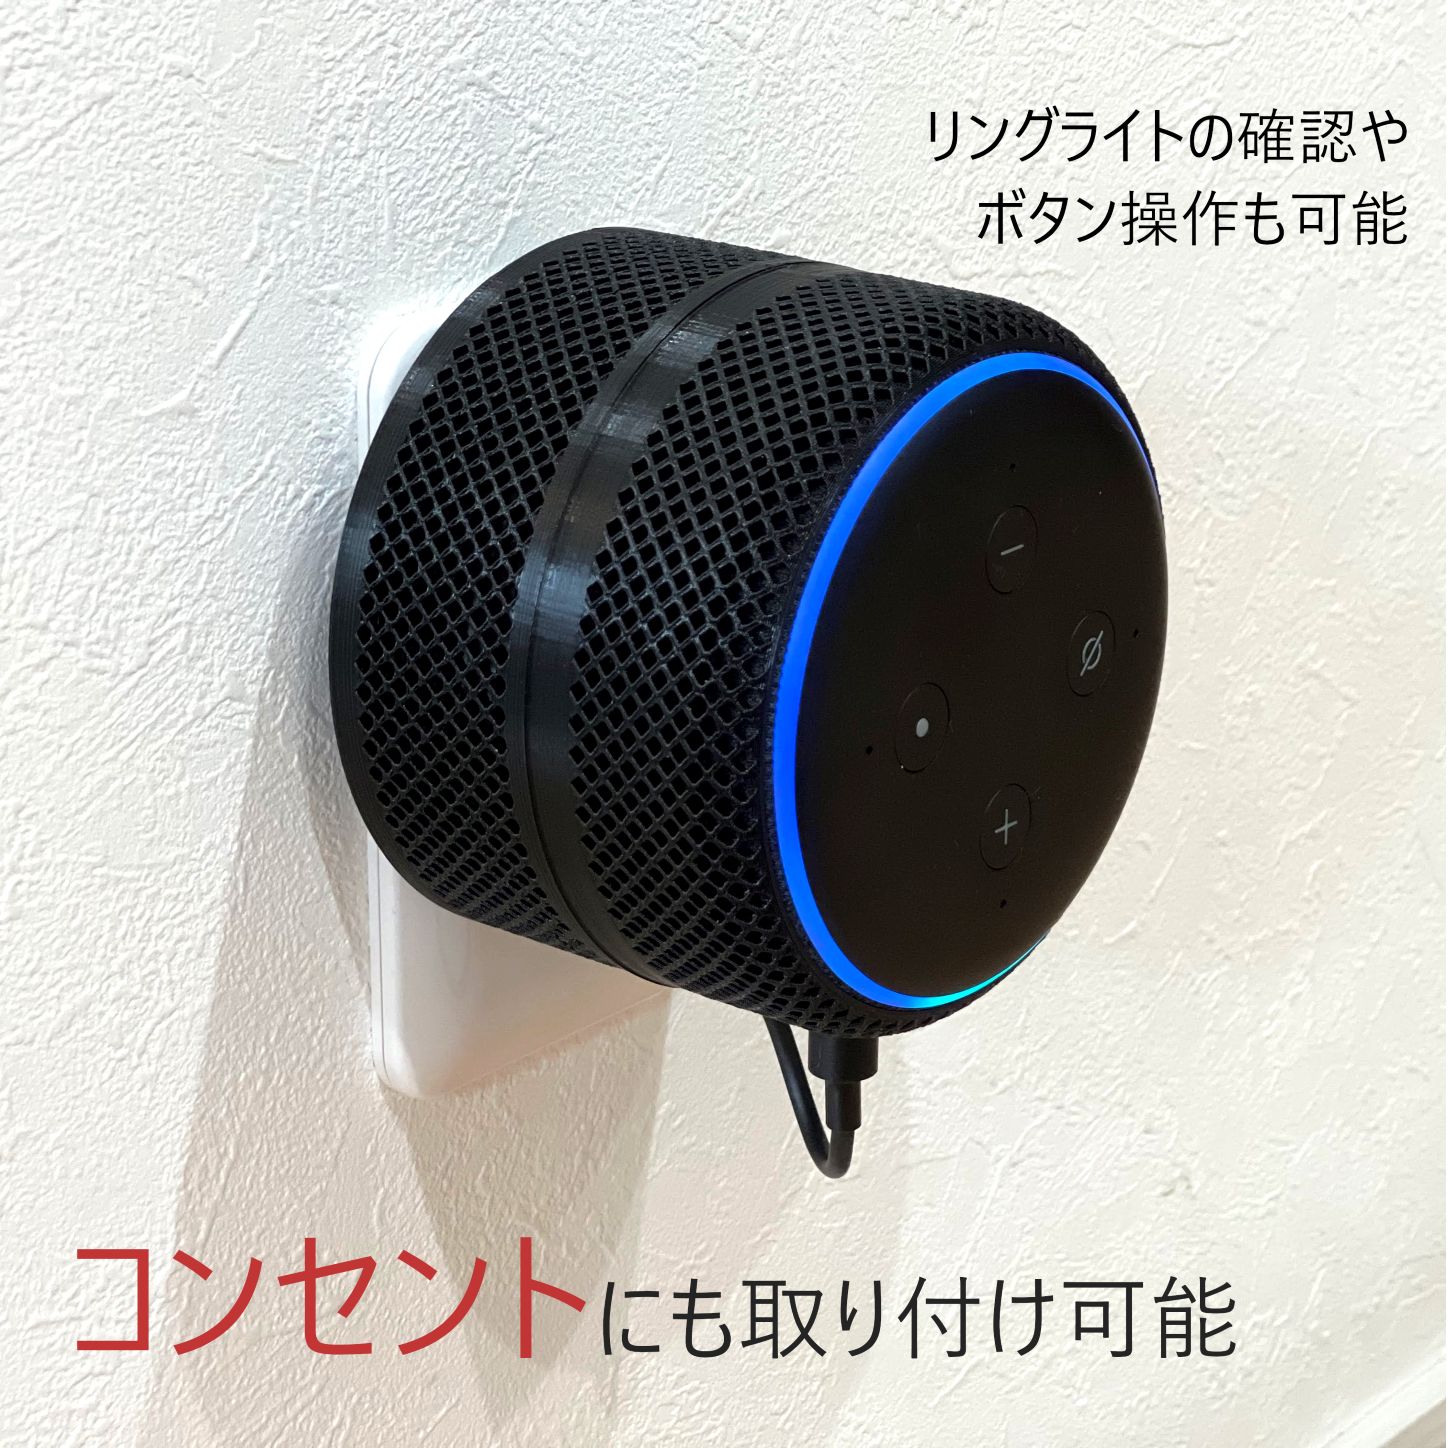 Amazon Echo Dot 第3世代 ライティングレール取付ユニット